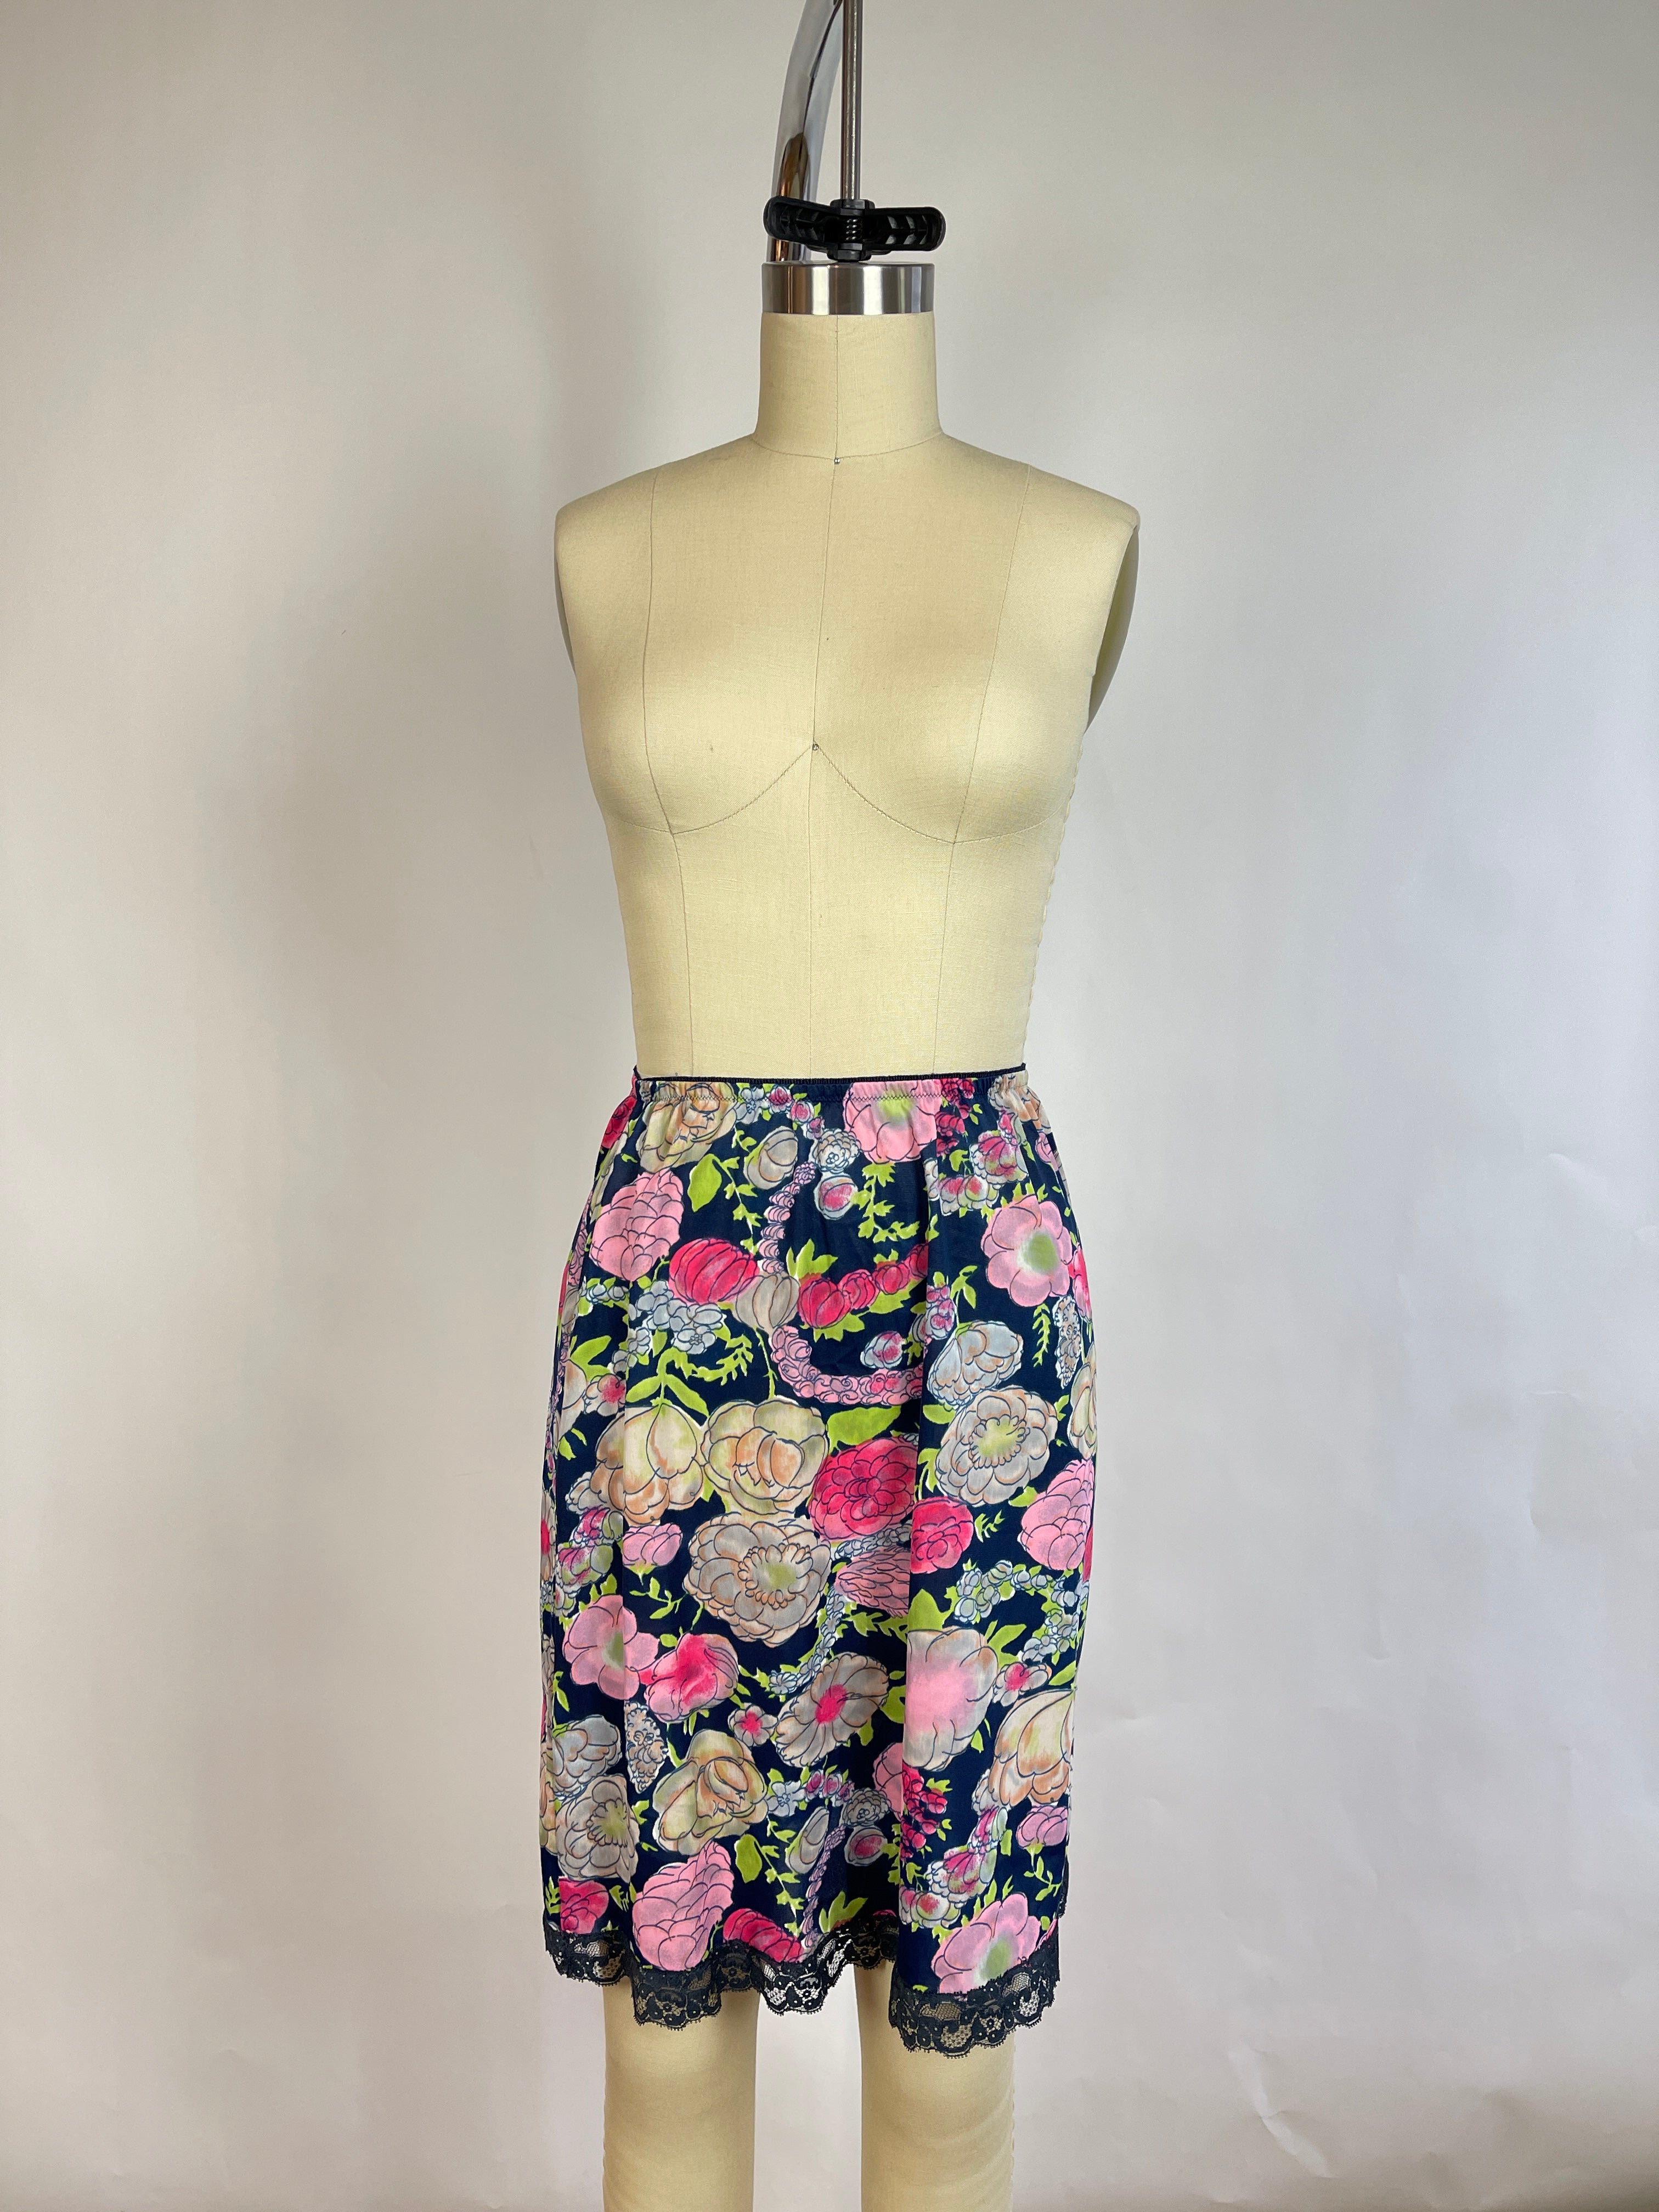 Vintage Sheer Floral Mini Skirt (XS)